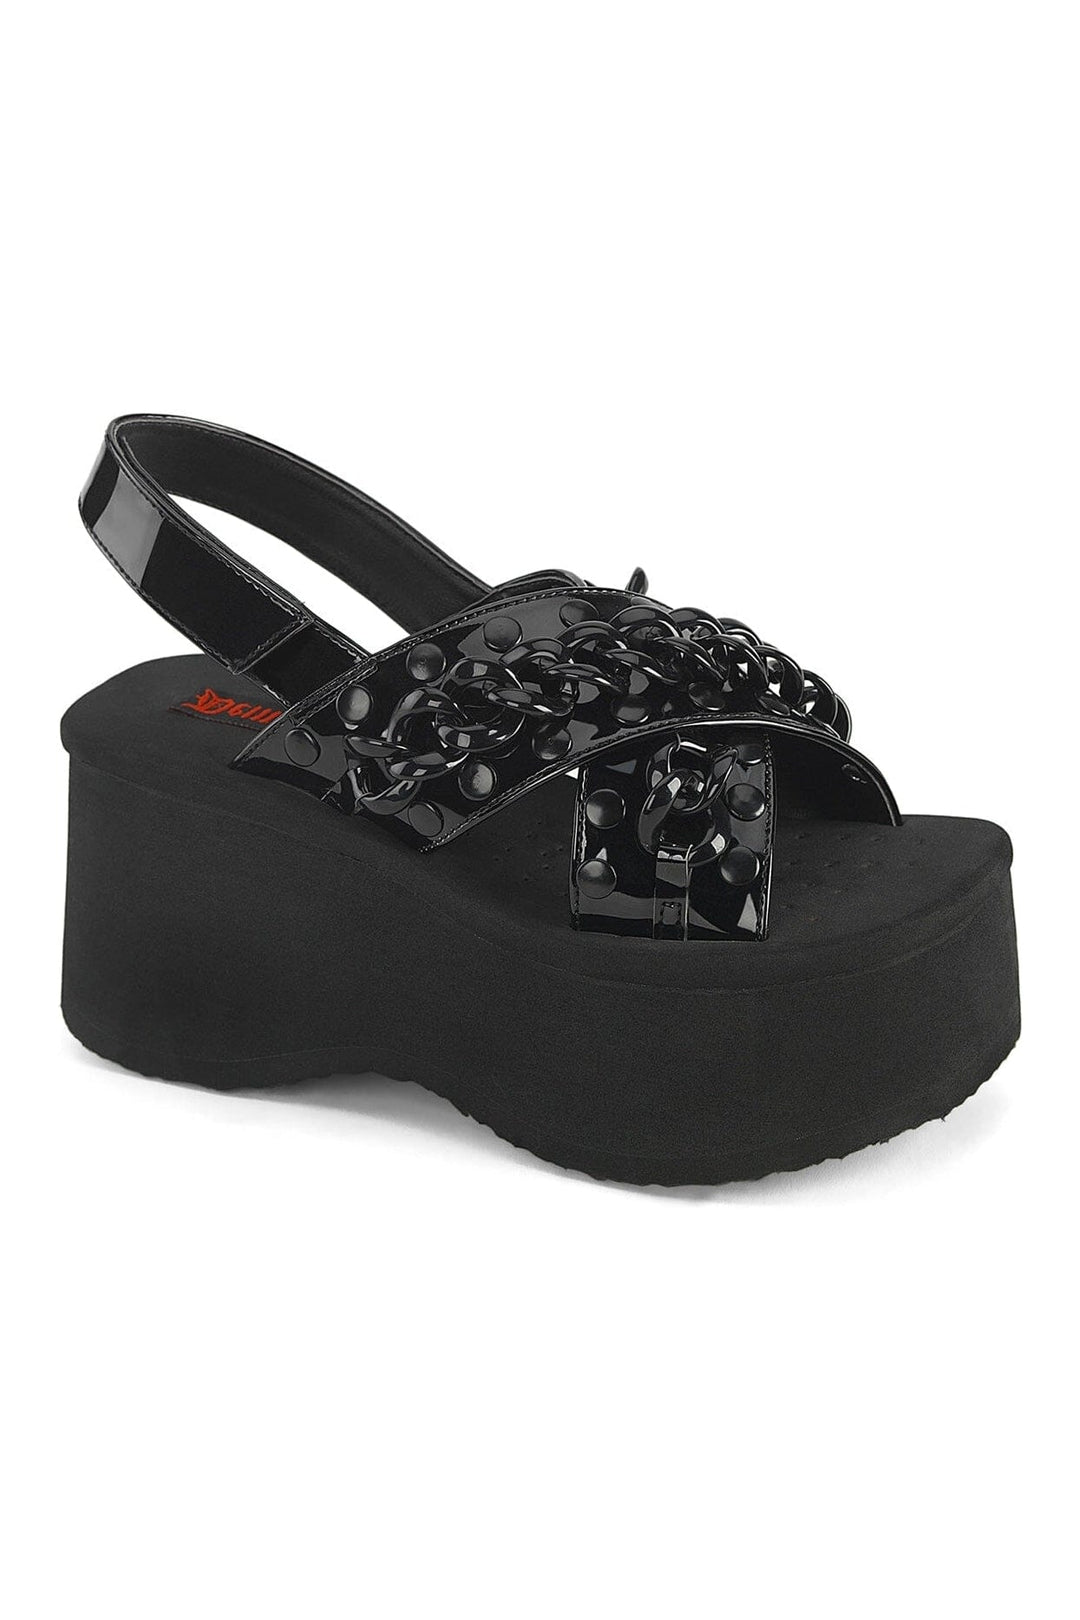 FUNN-12 Black Hologram Patent Sandal-Sandals-Demonia-Black-10-Hologram Patent-SEXYSHOES.COM